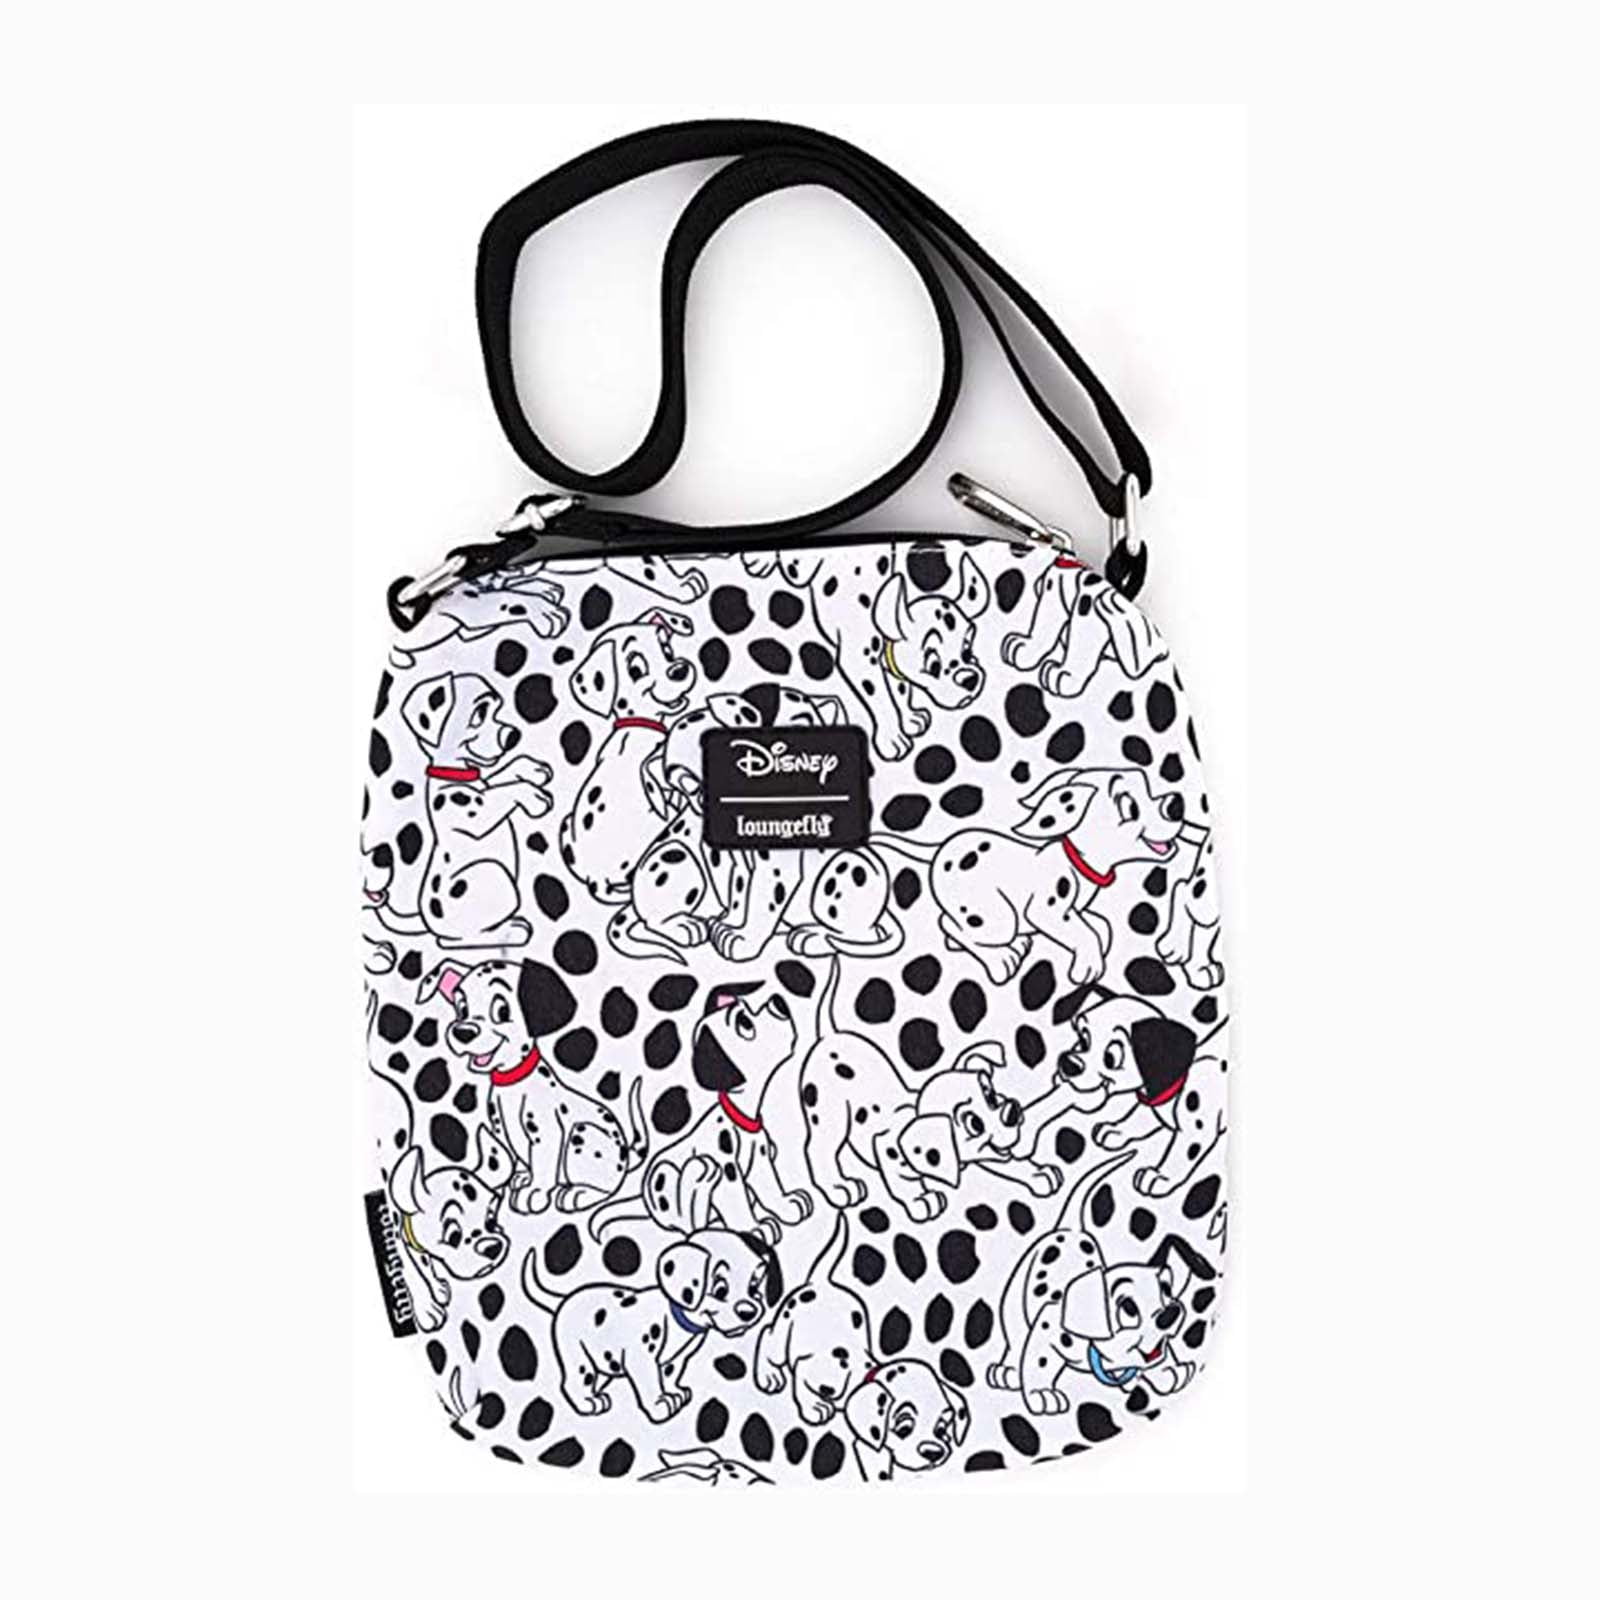 $ LOUNGEFLY DISNEY Handbag Purse Bag 101 DALMATIANS PUPPY DOG Black White Red 